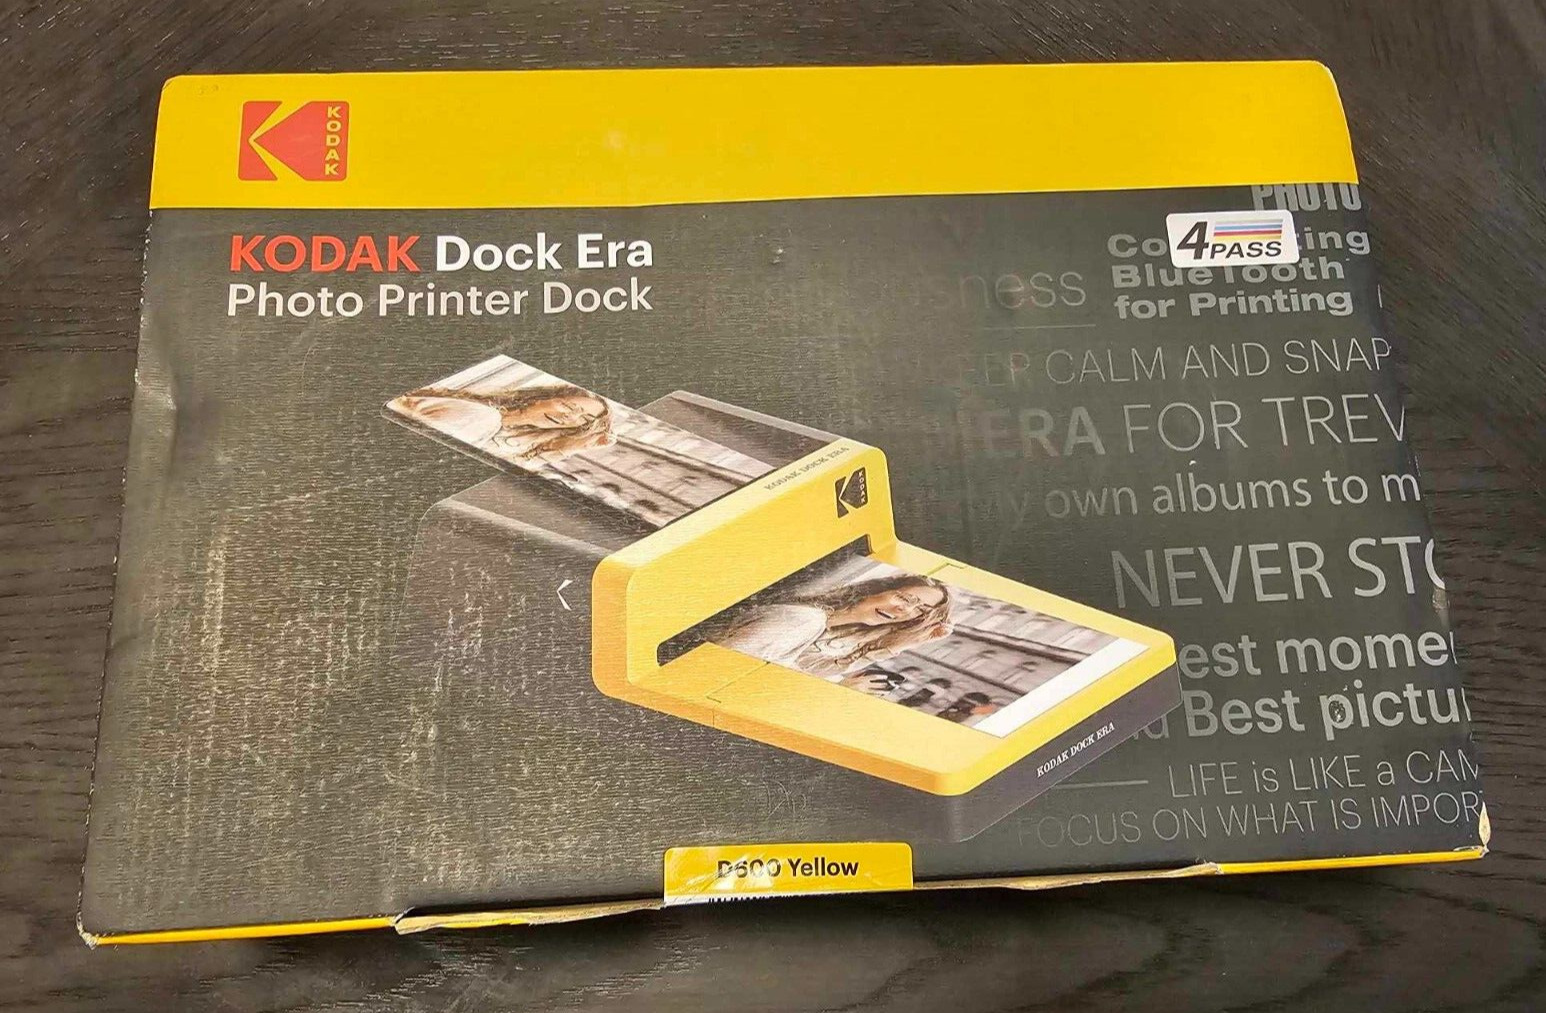 Kodak Dock ERA 4PASS Instant Portable Photo Printer (4x6) Printer